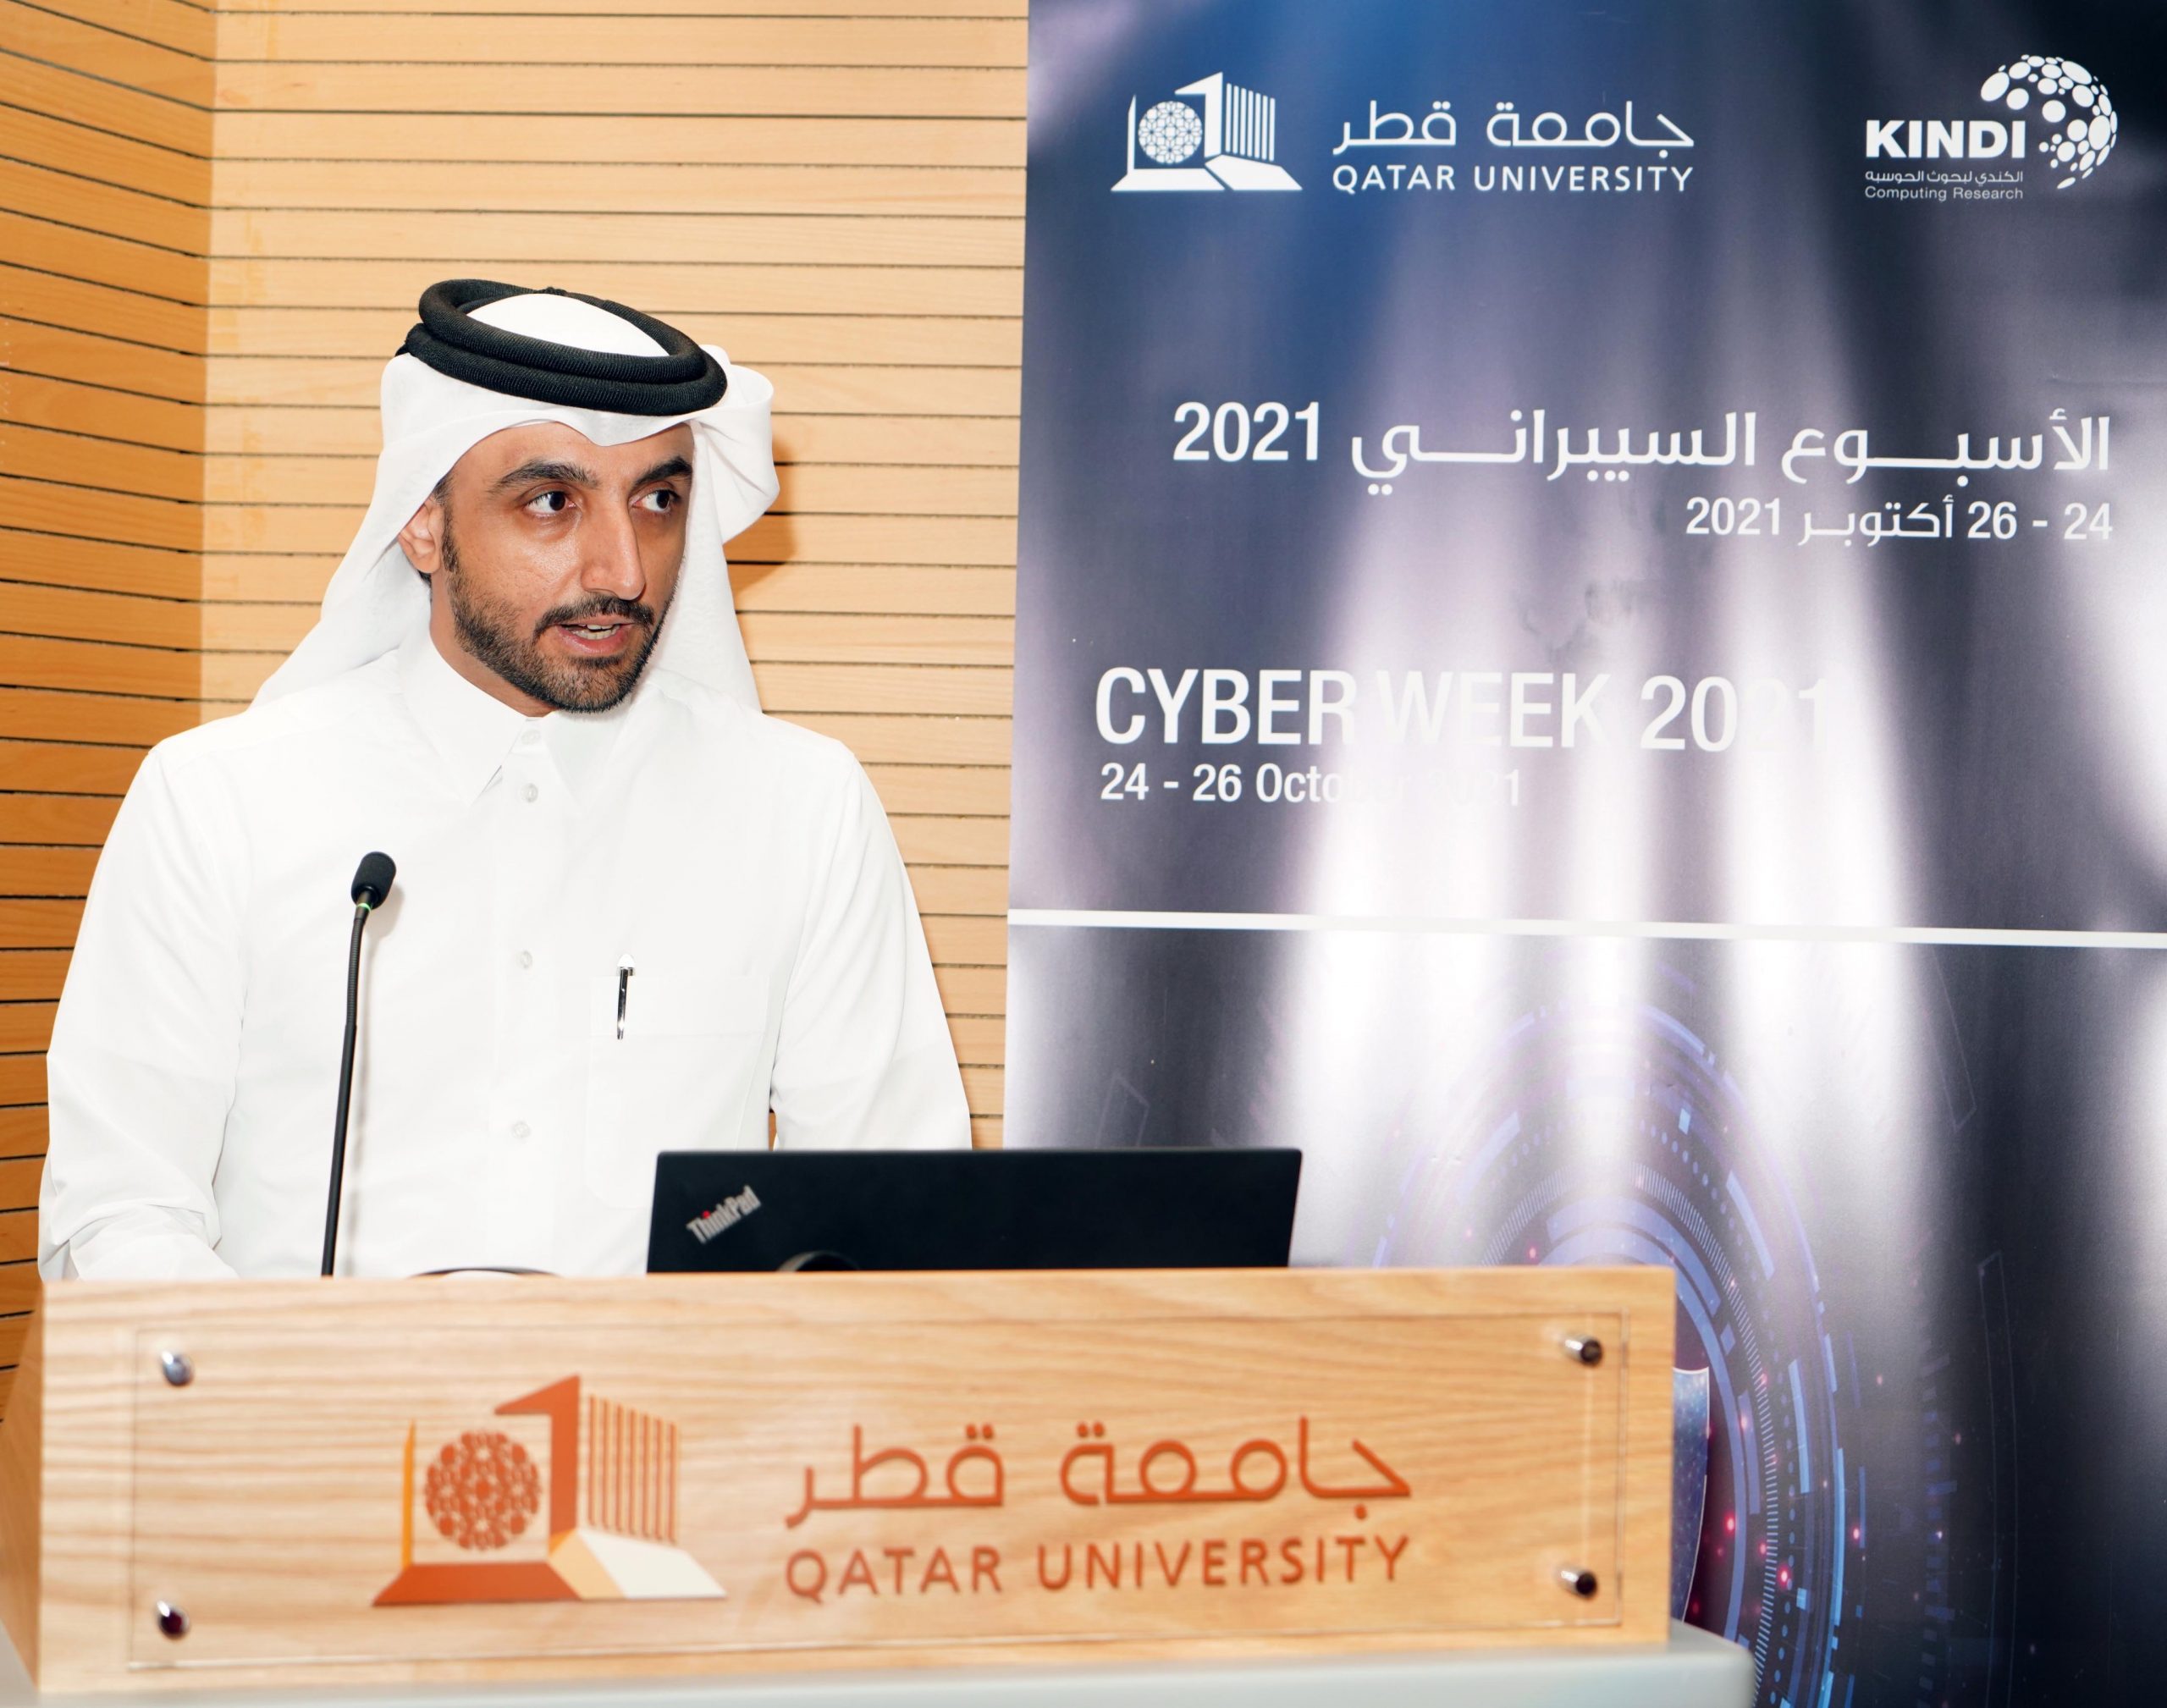 Qatar University's Events for Cyber Week Kick Off